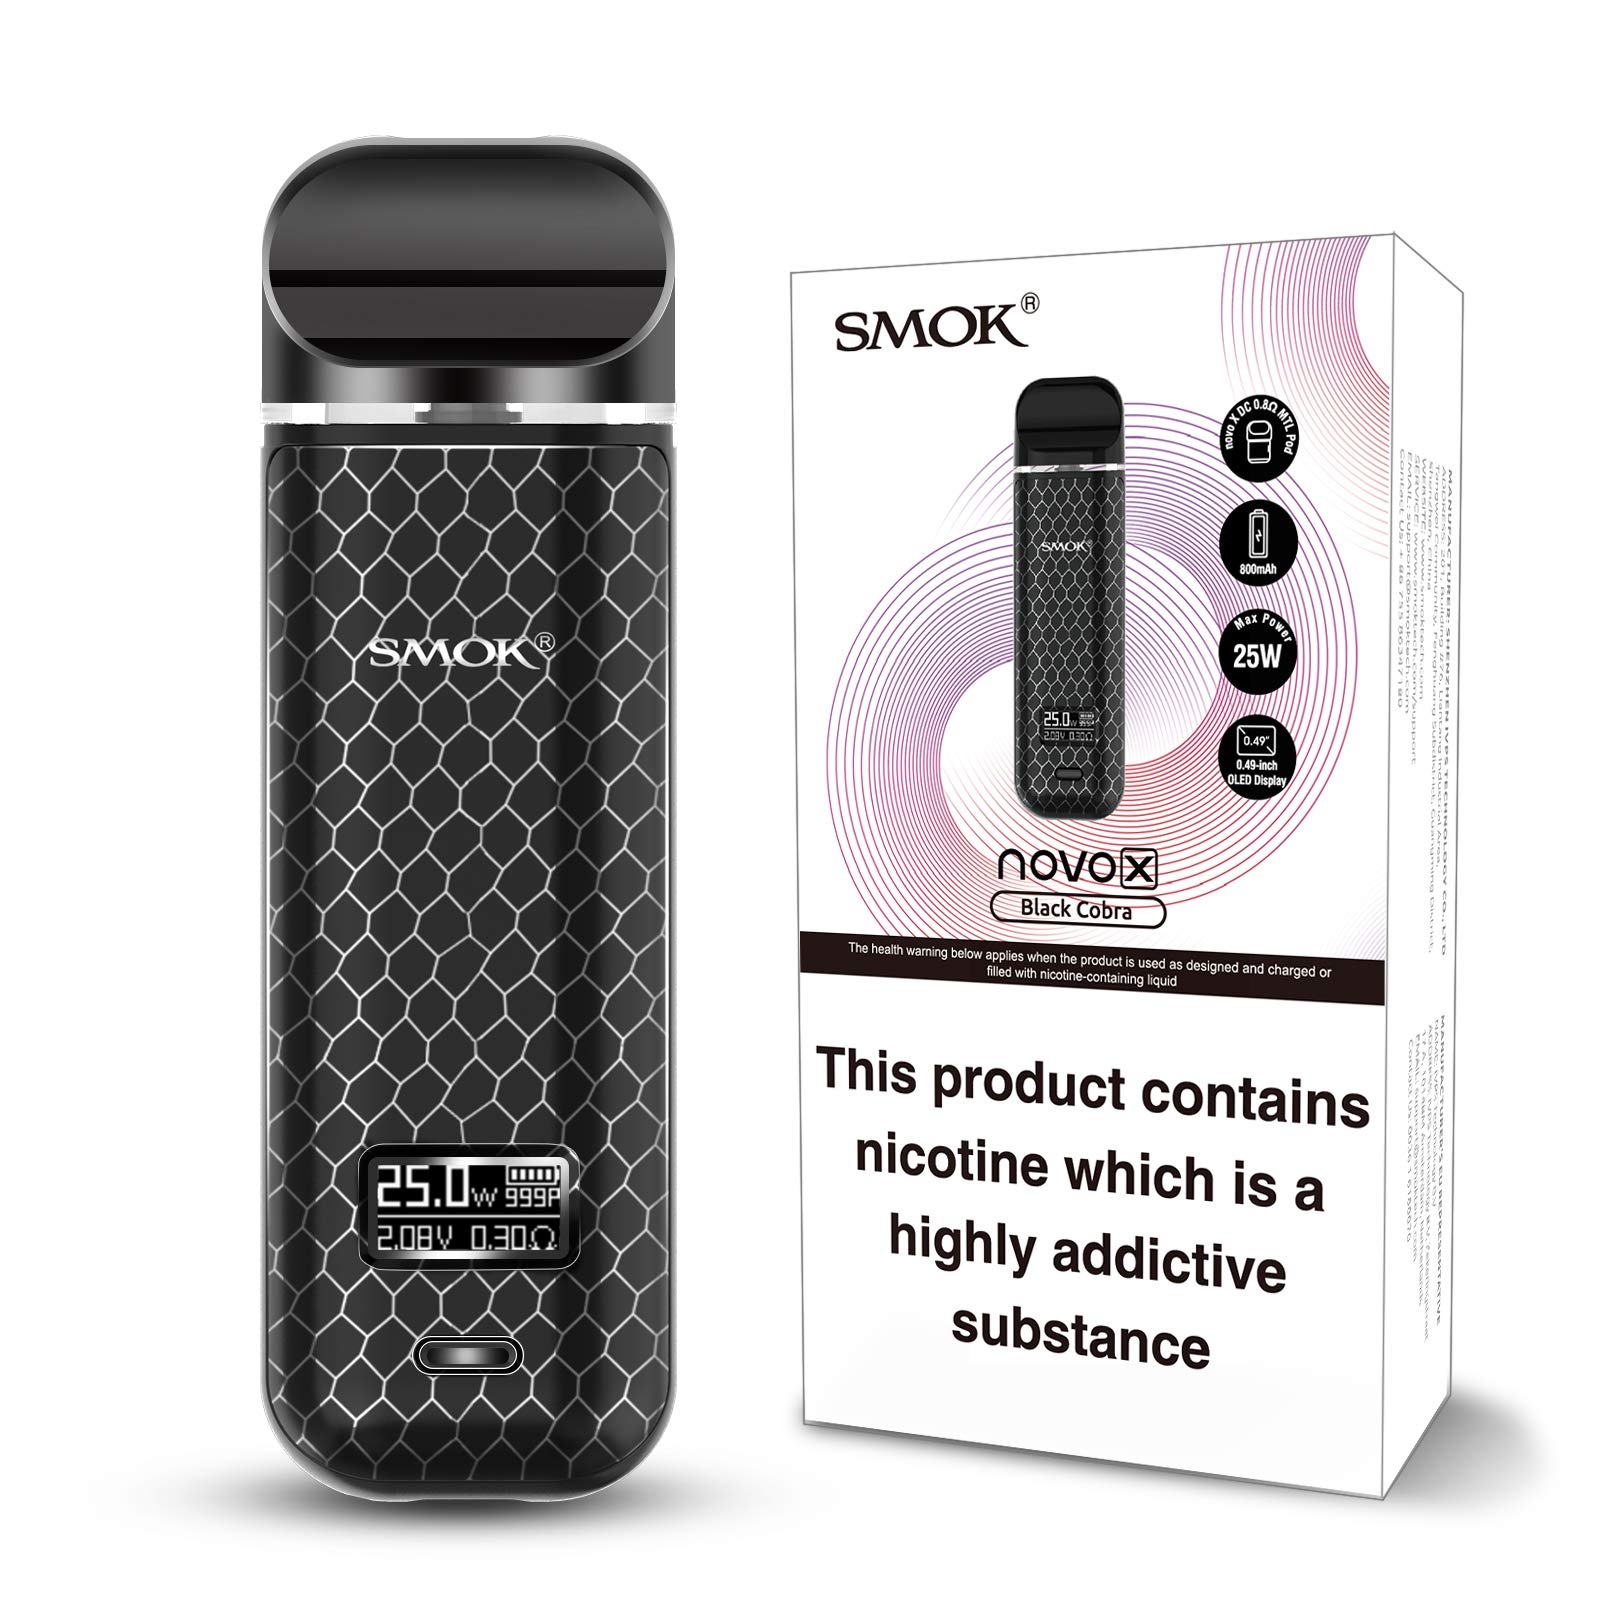 Product Review: SMOK NOVO X POD KIT